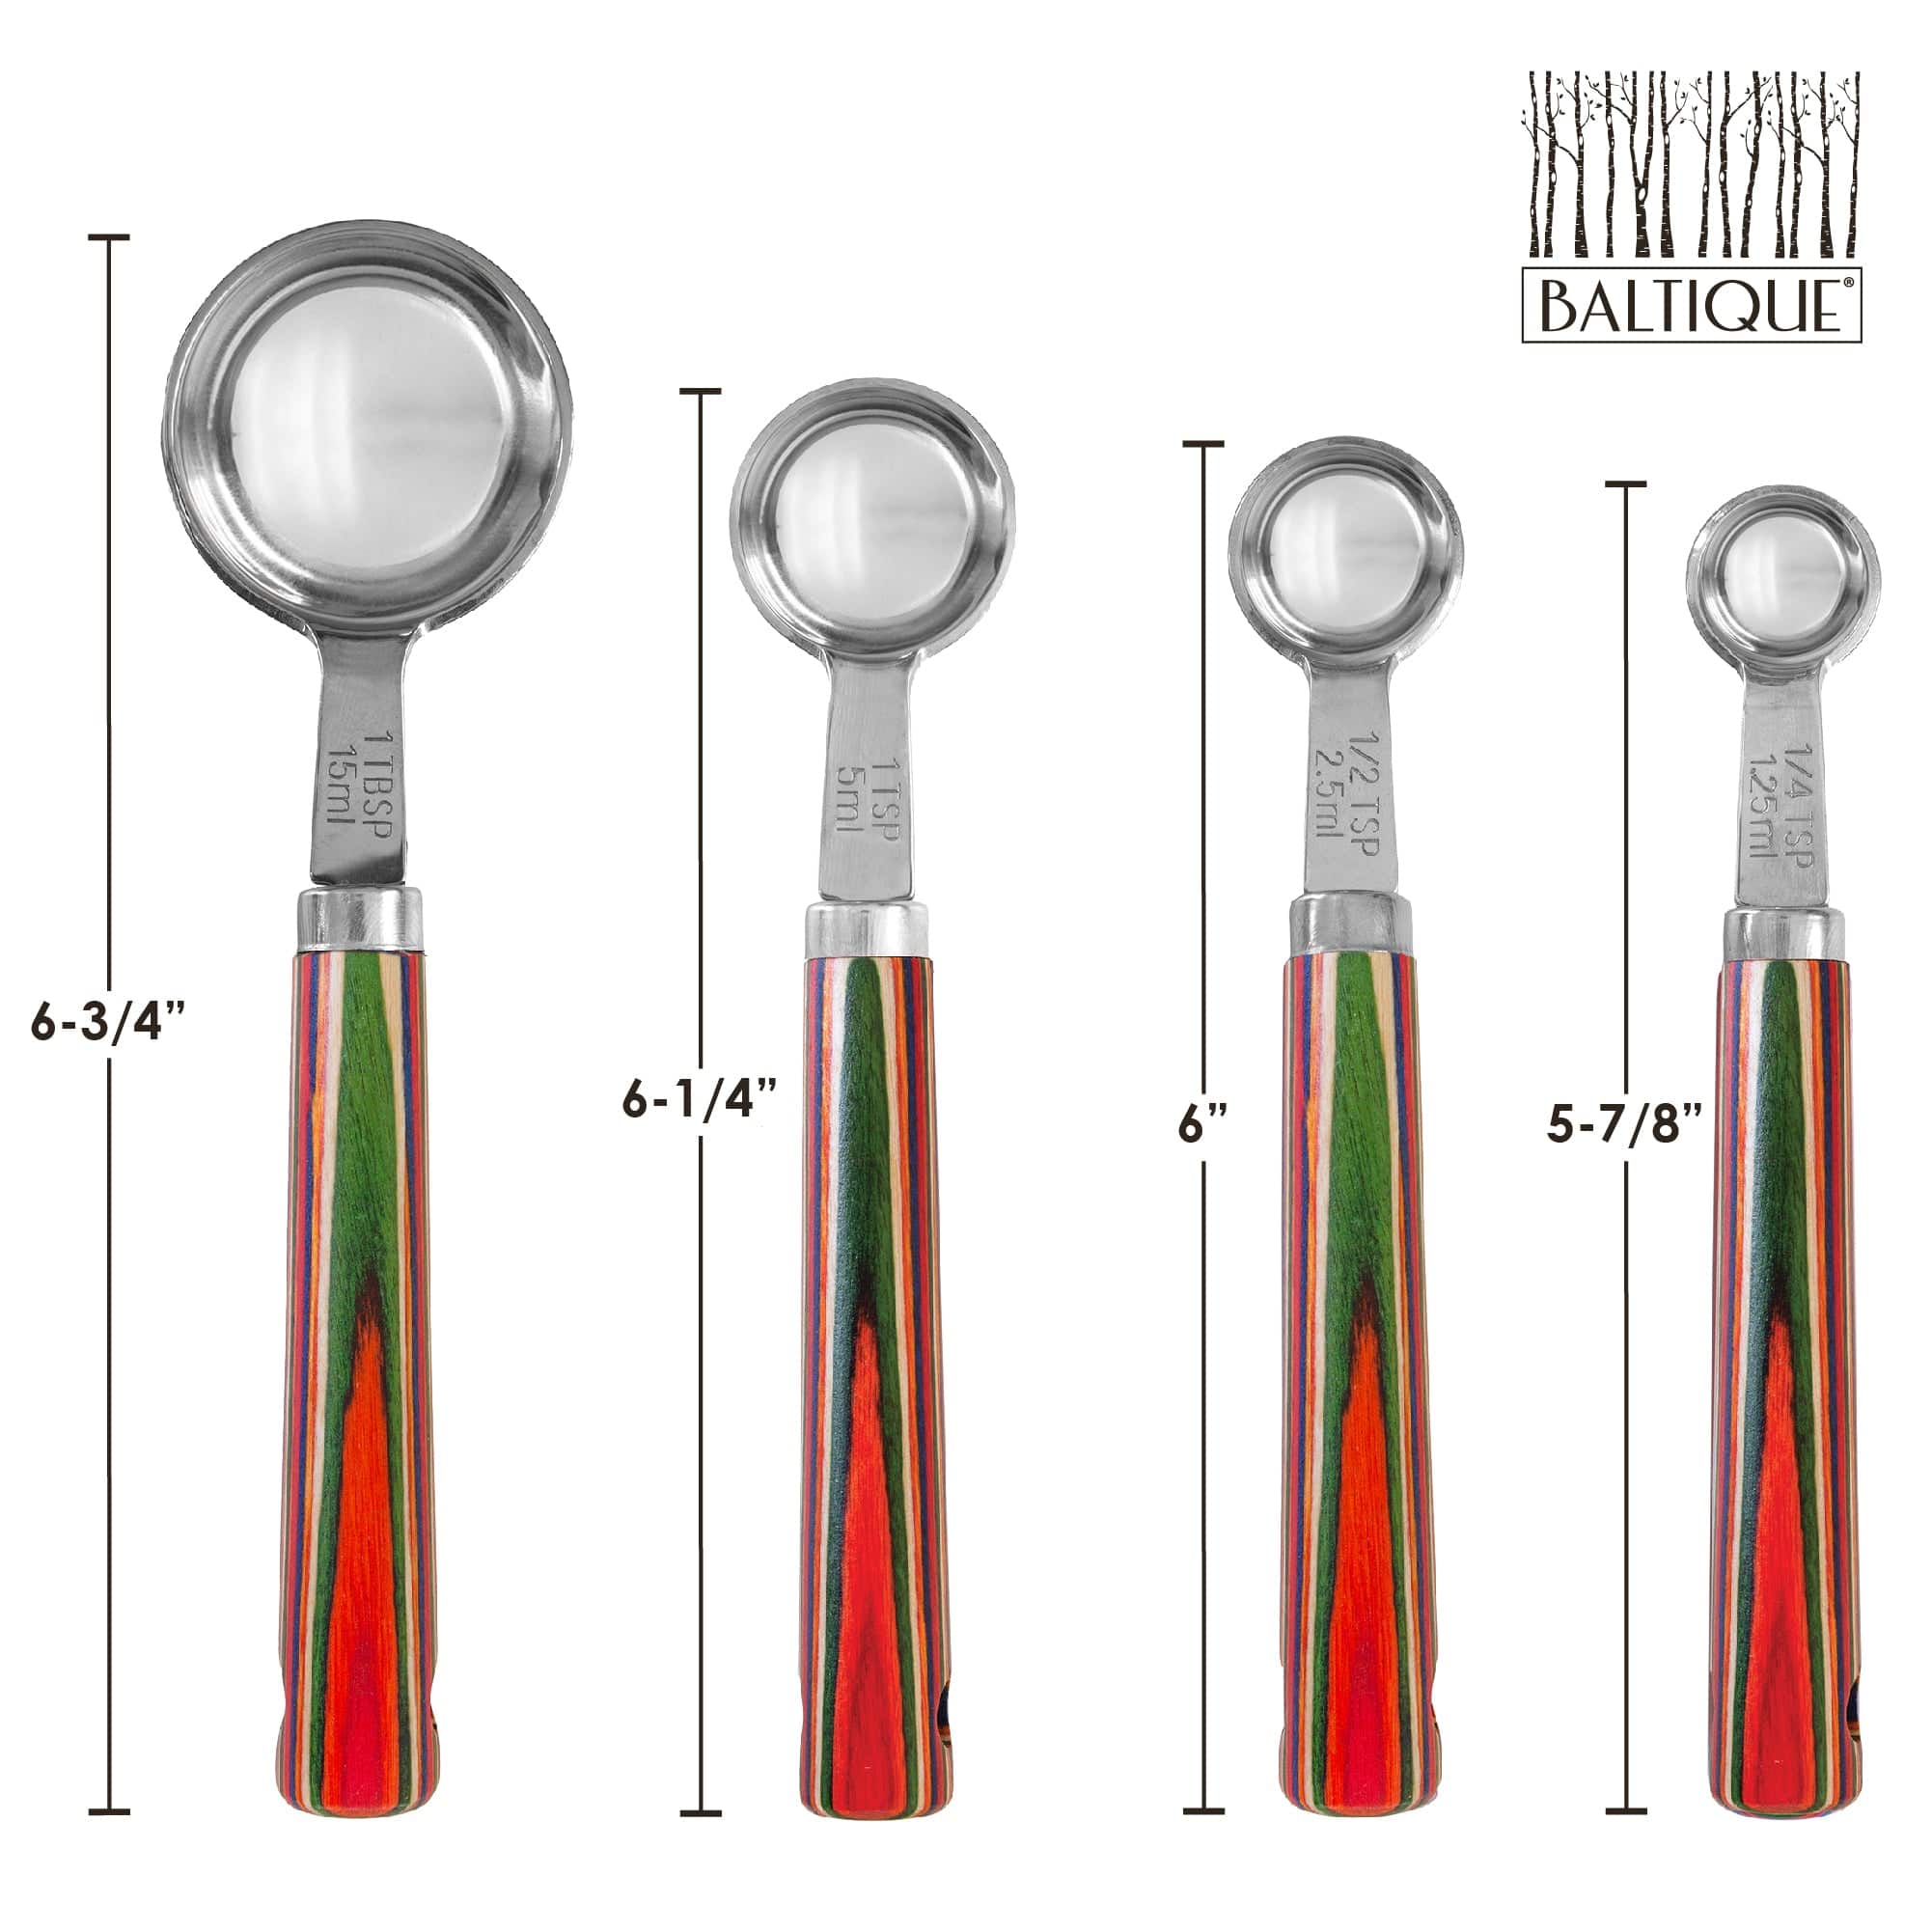 Measuring Spoons, Set of 7